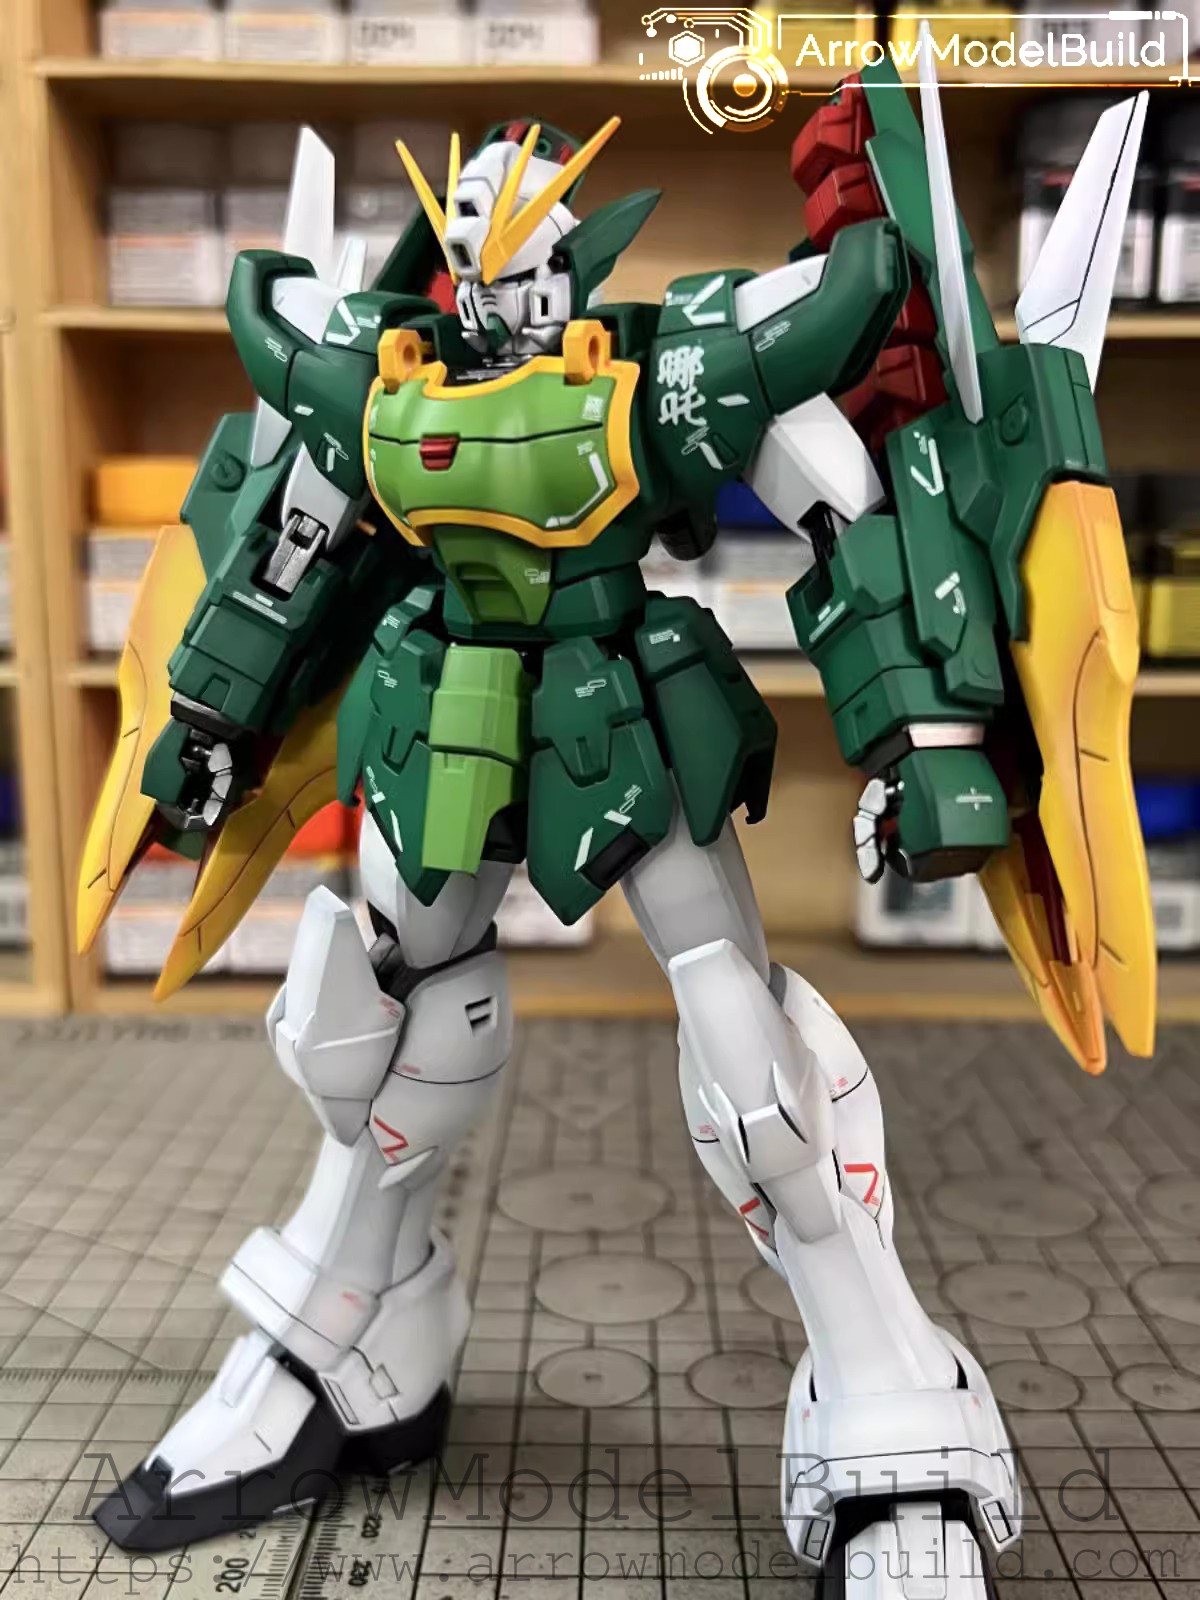 Picture of ArrowModelBuild Double-Headed Dragon Gundam (Advanced Type) Built & Painted 1/100 Model Kit